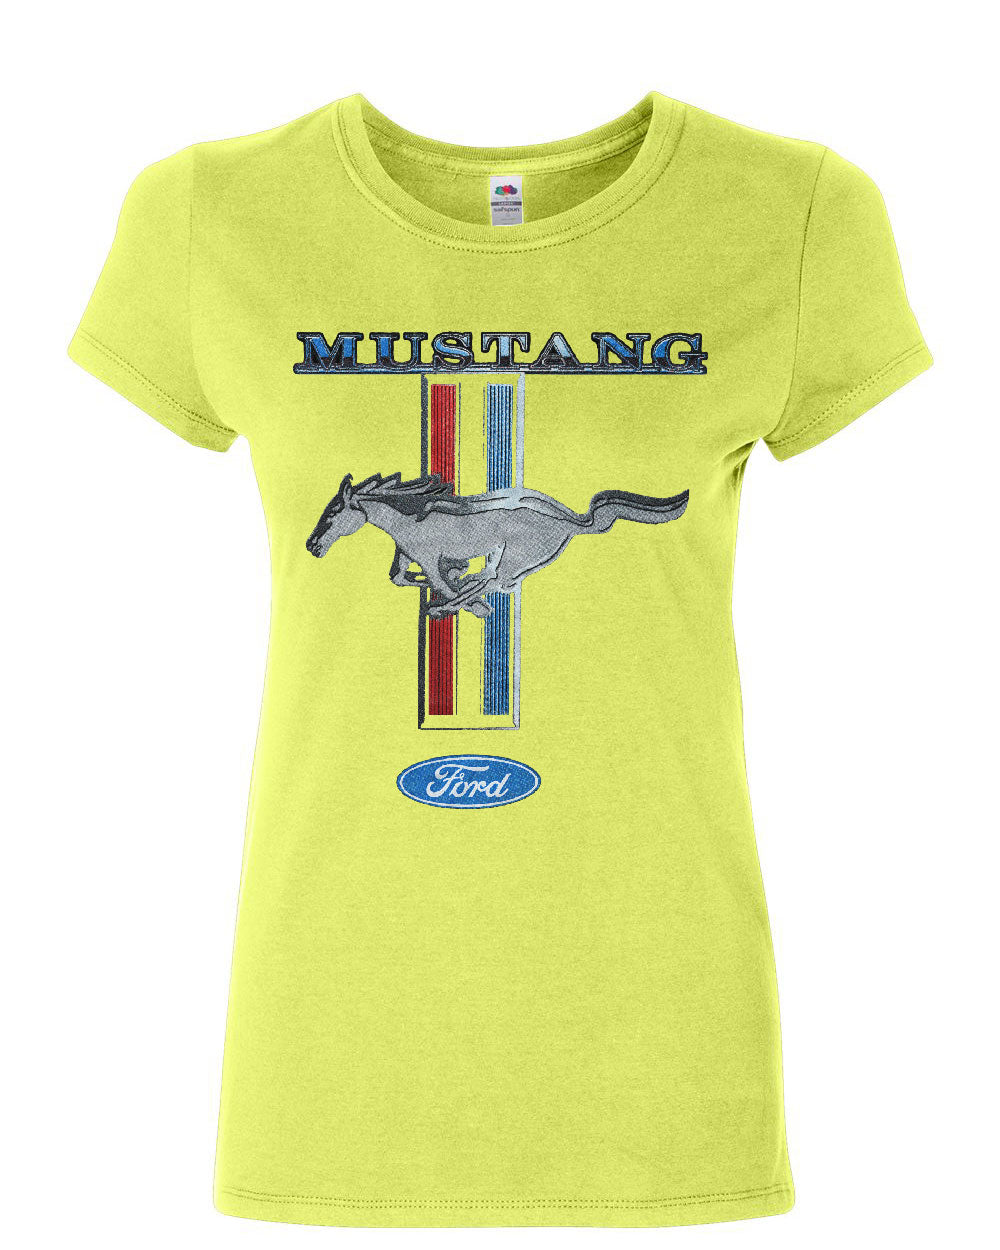 Ford Mustang Classic Women's T-Shirt | eBay